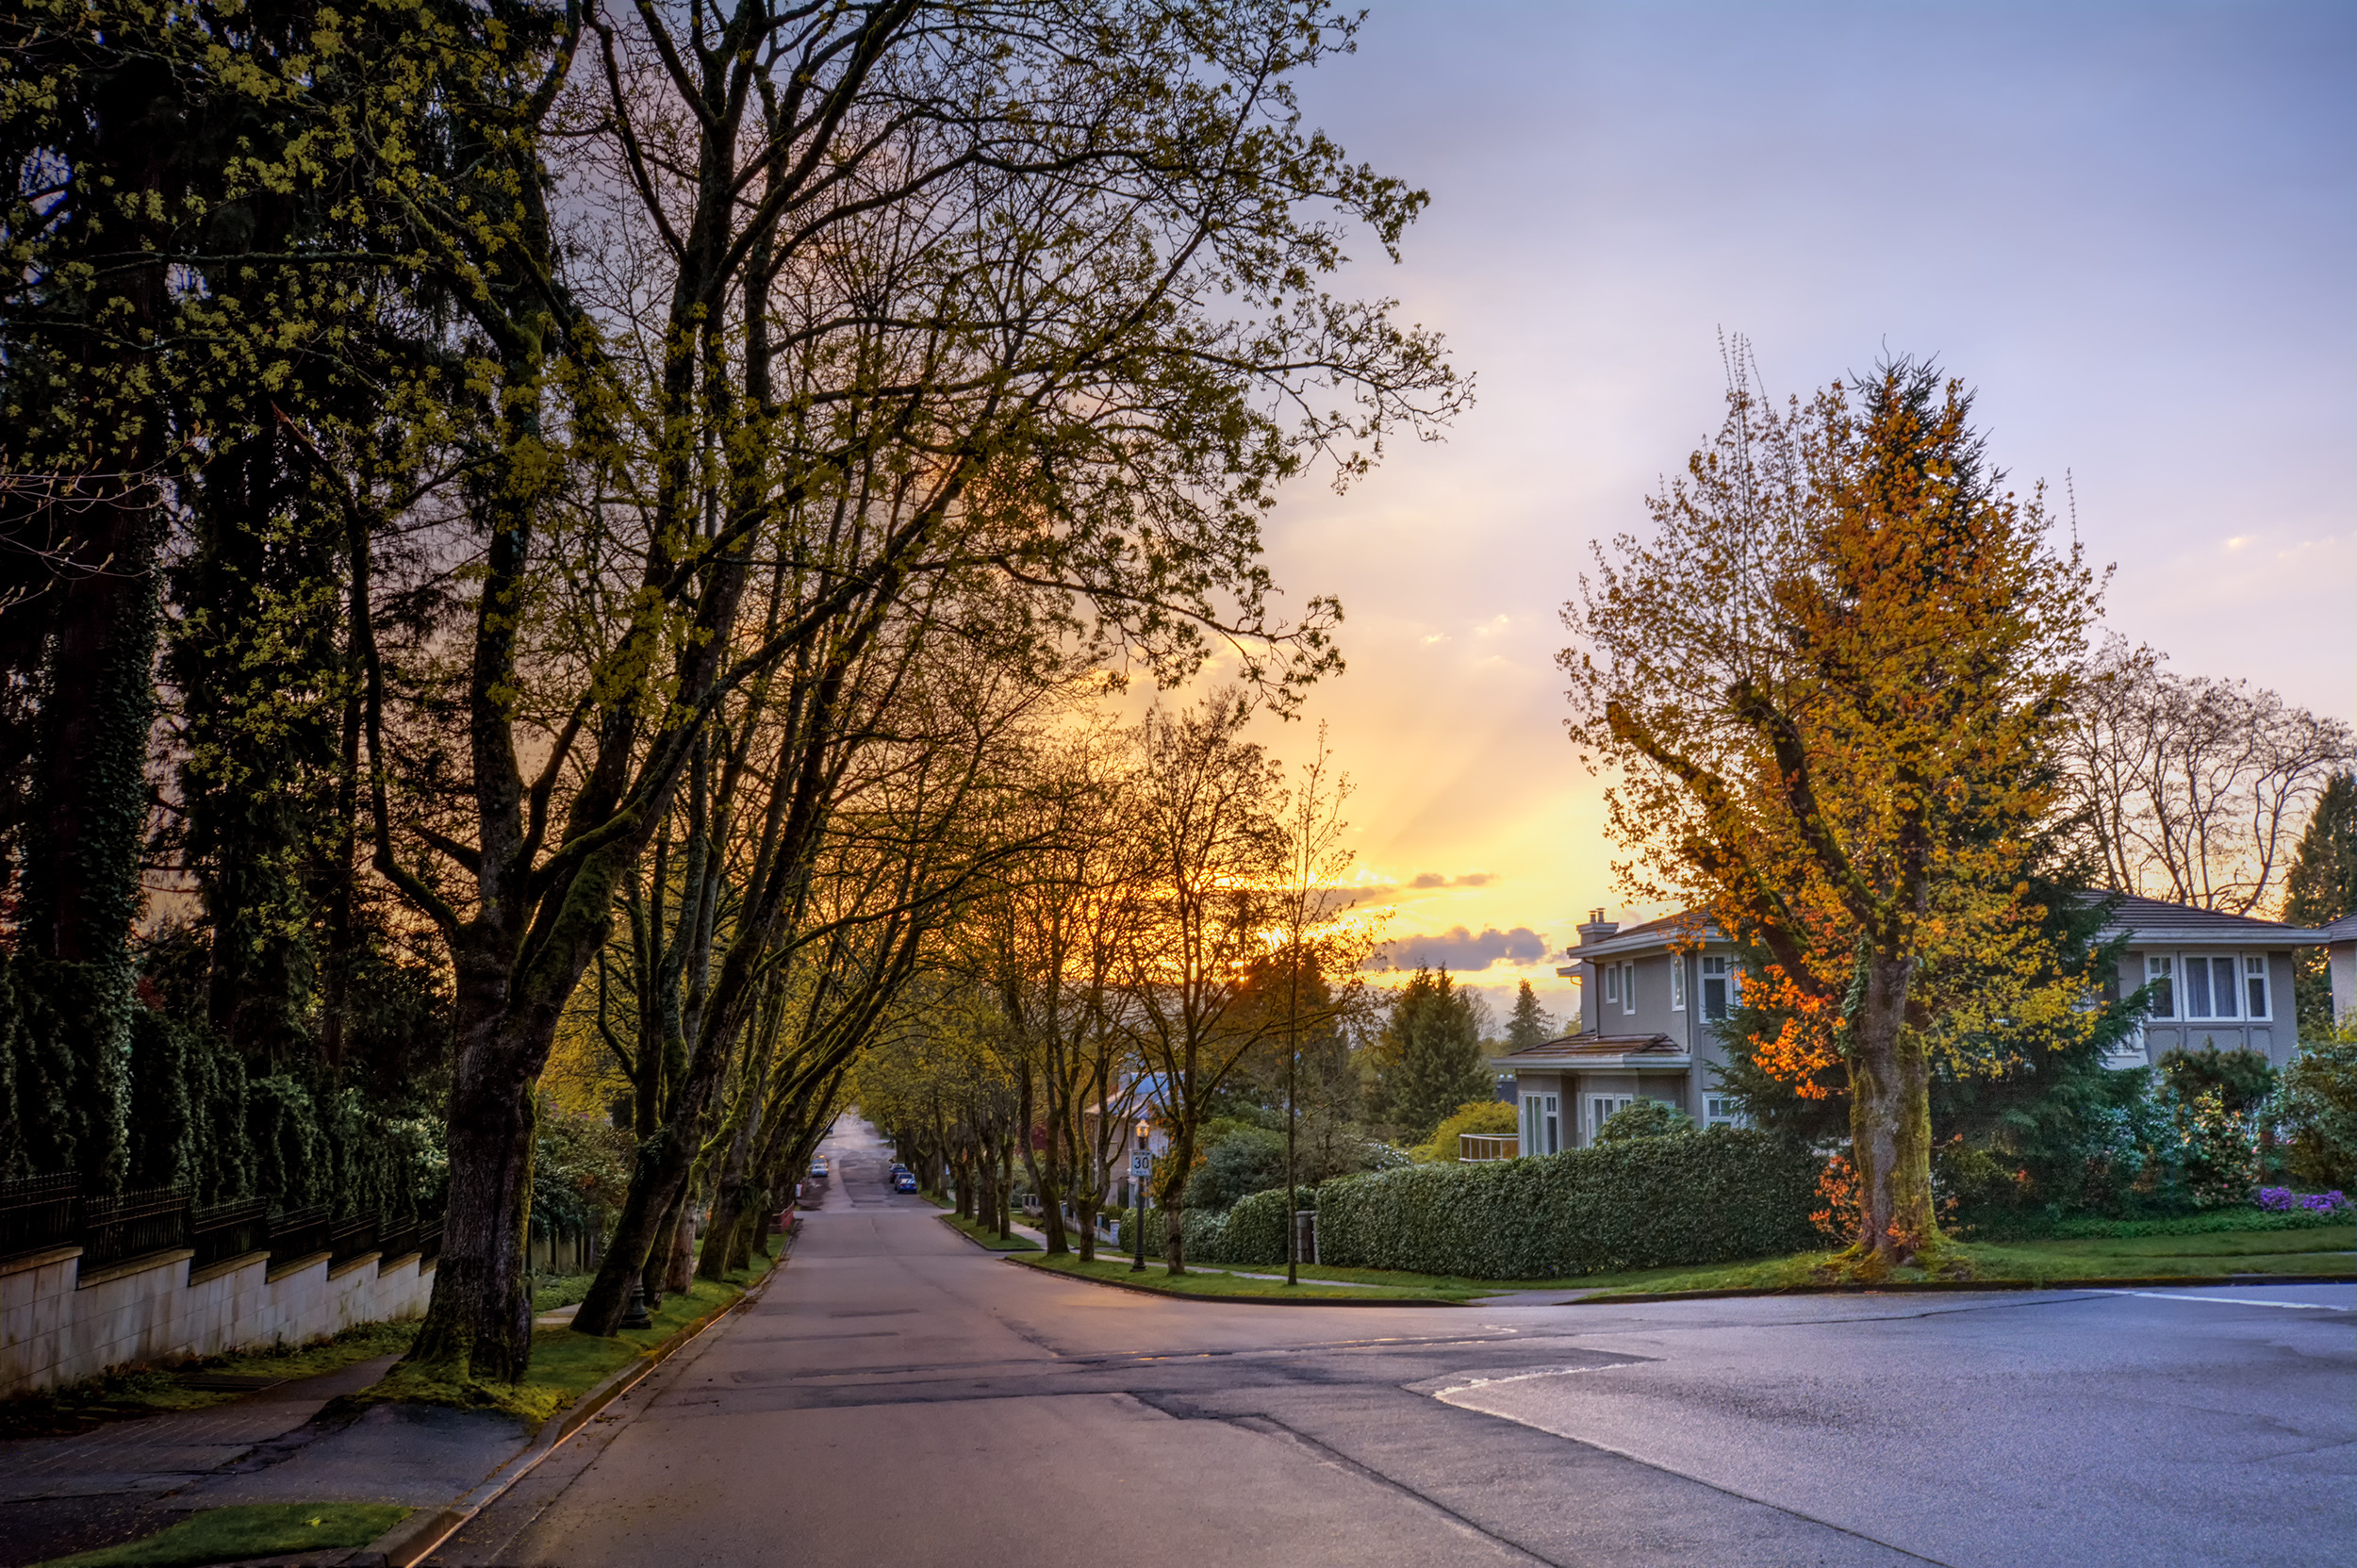 Serene suburban street | Source: Shutterstock